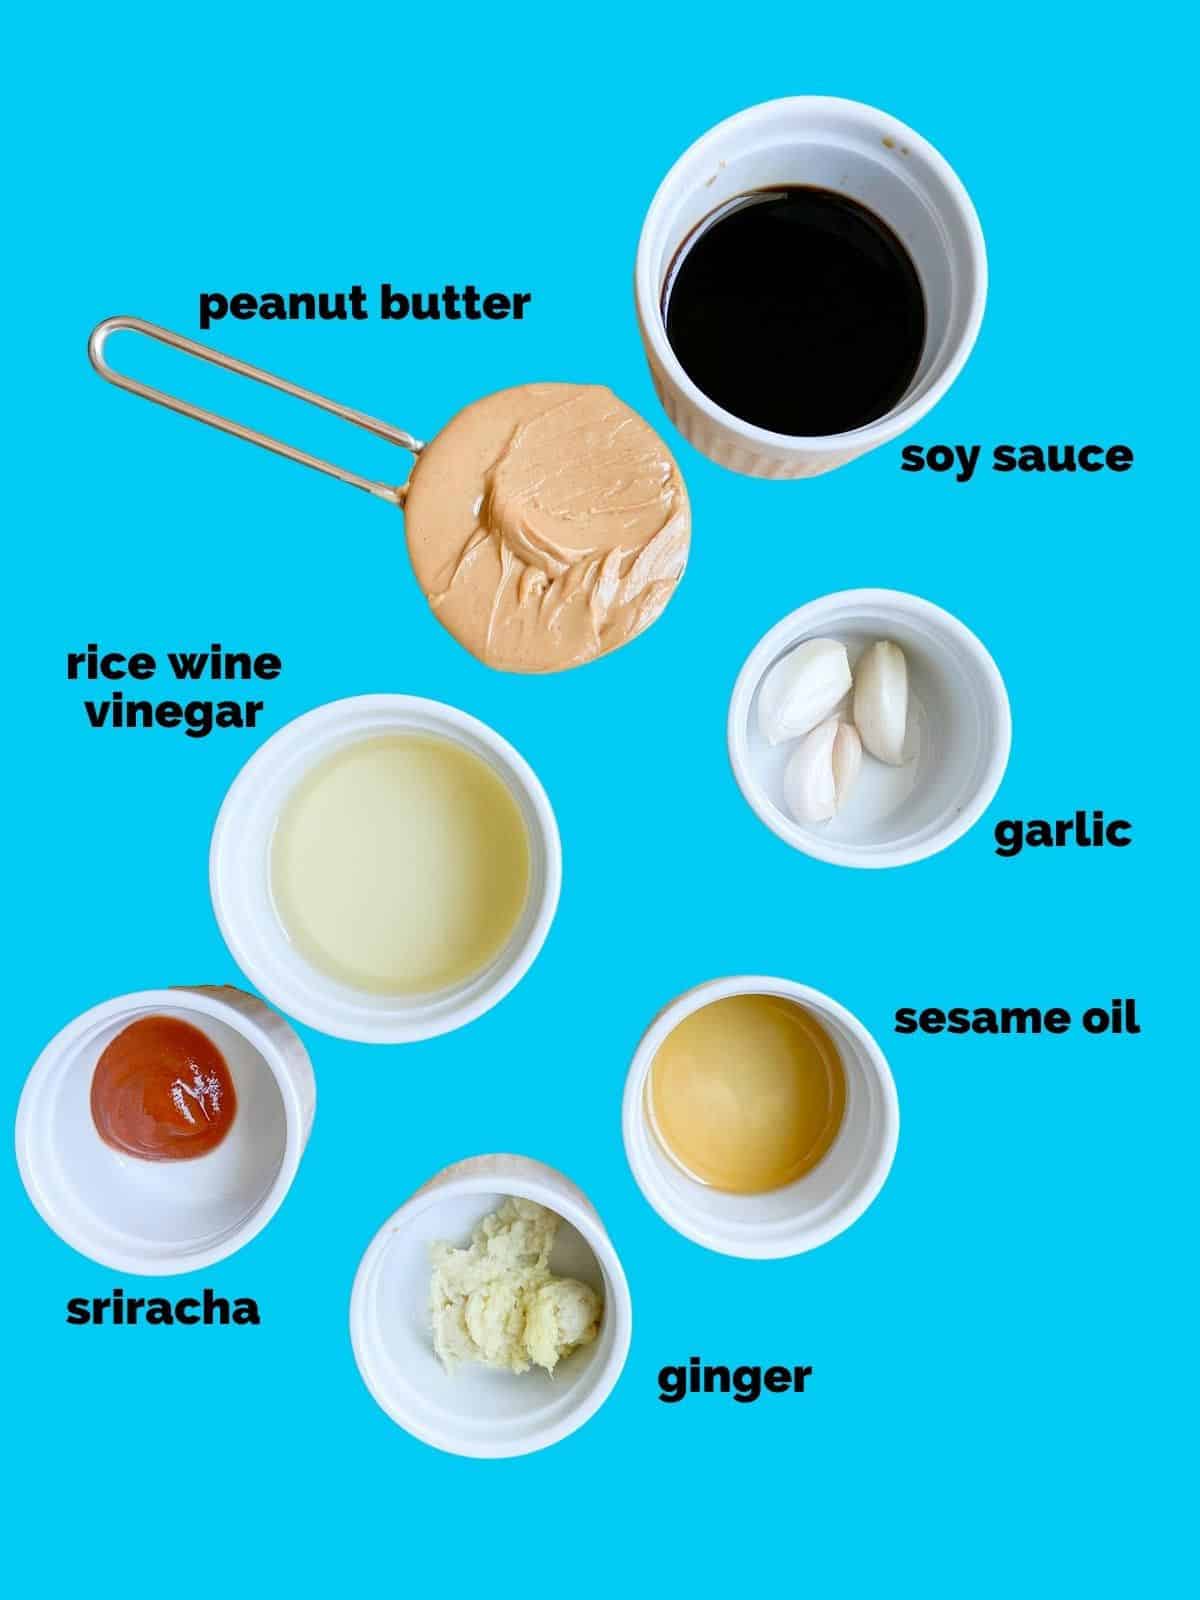 peanut sauce ingredients